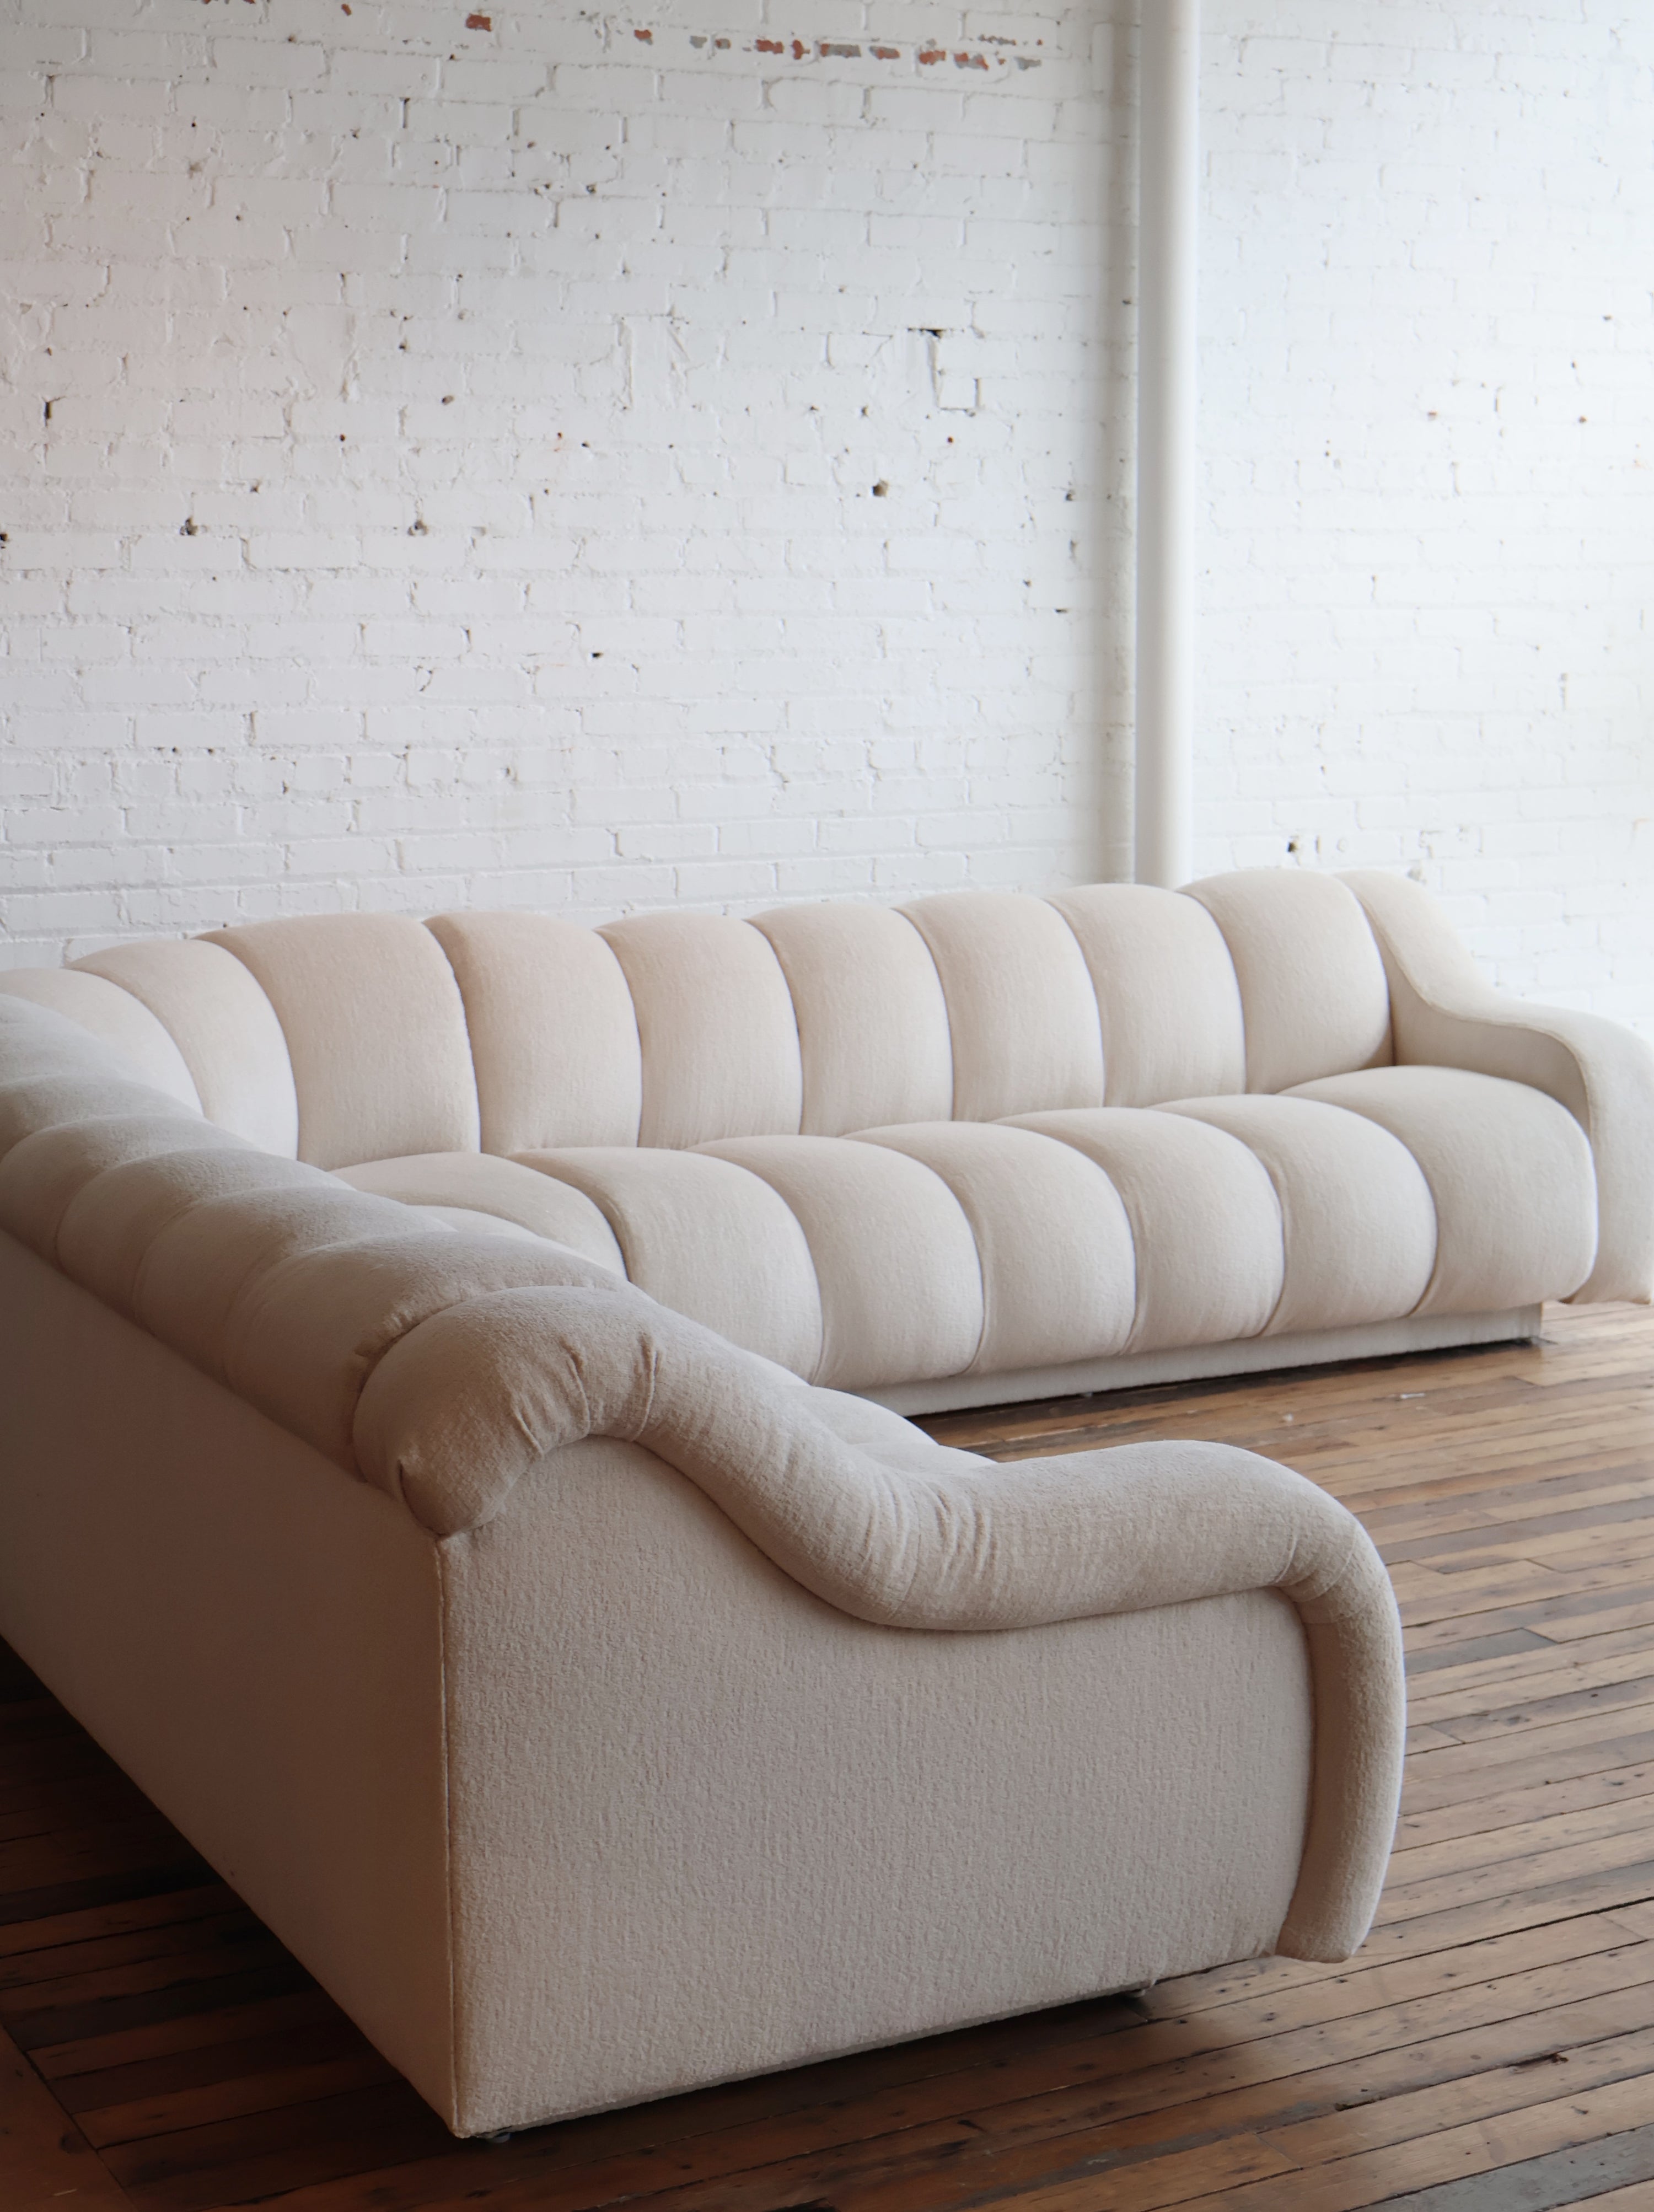 Vintage Custom Upholstered Directional Channeled Sectional Sofa